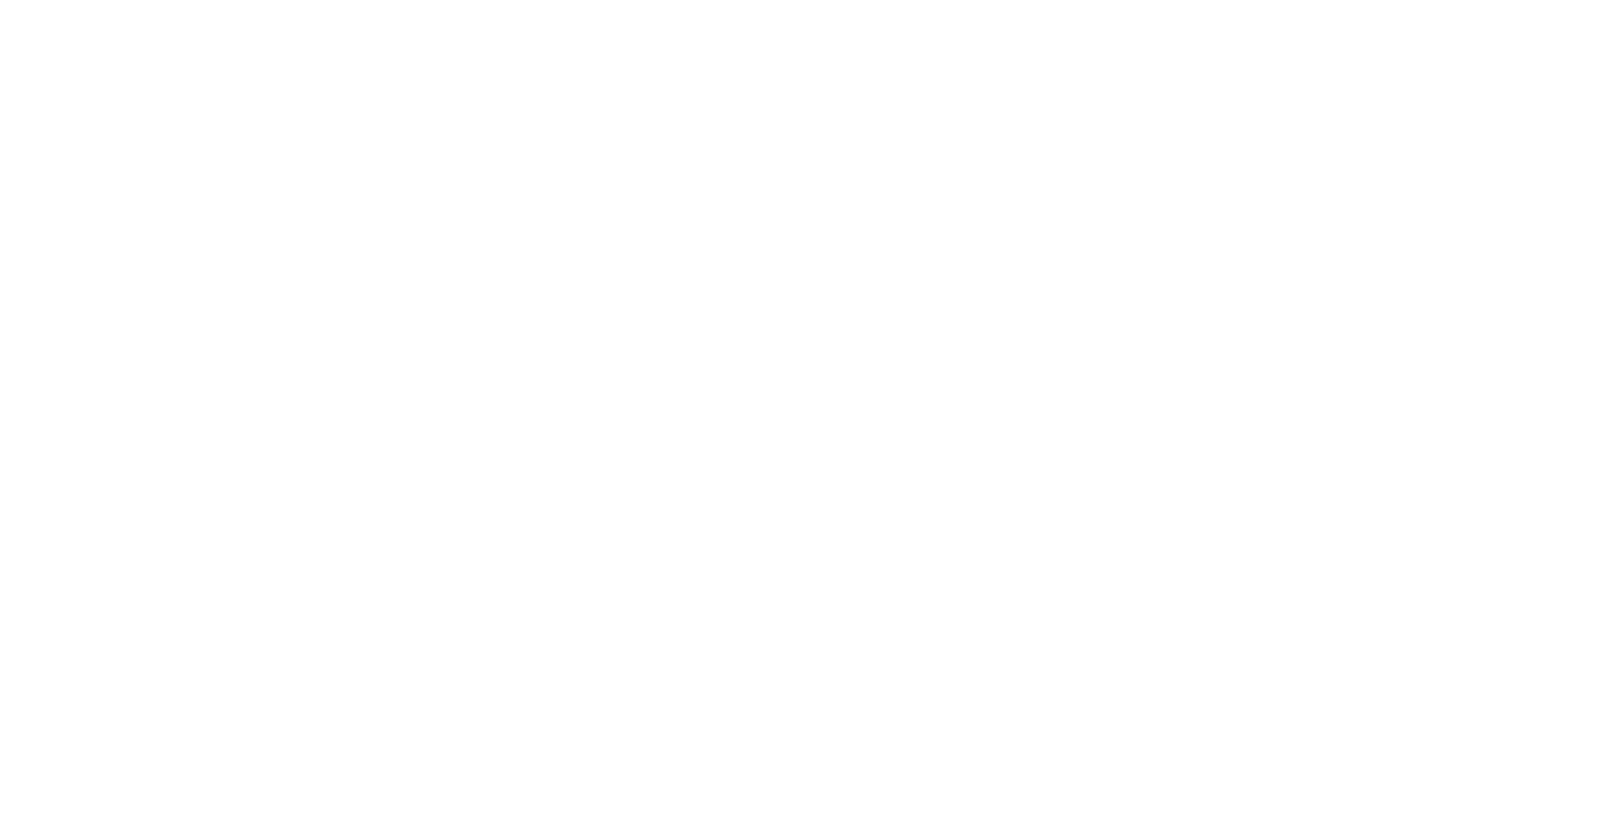 CapitaLand Mall Trust logo grand pour les fonds sombres (PNG transparent)